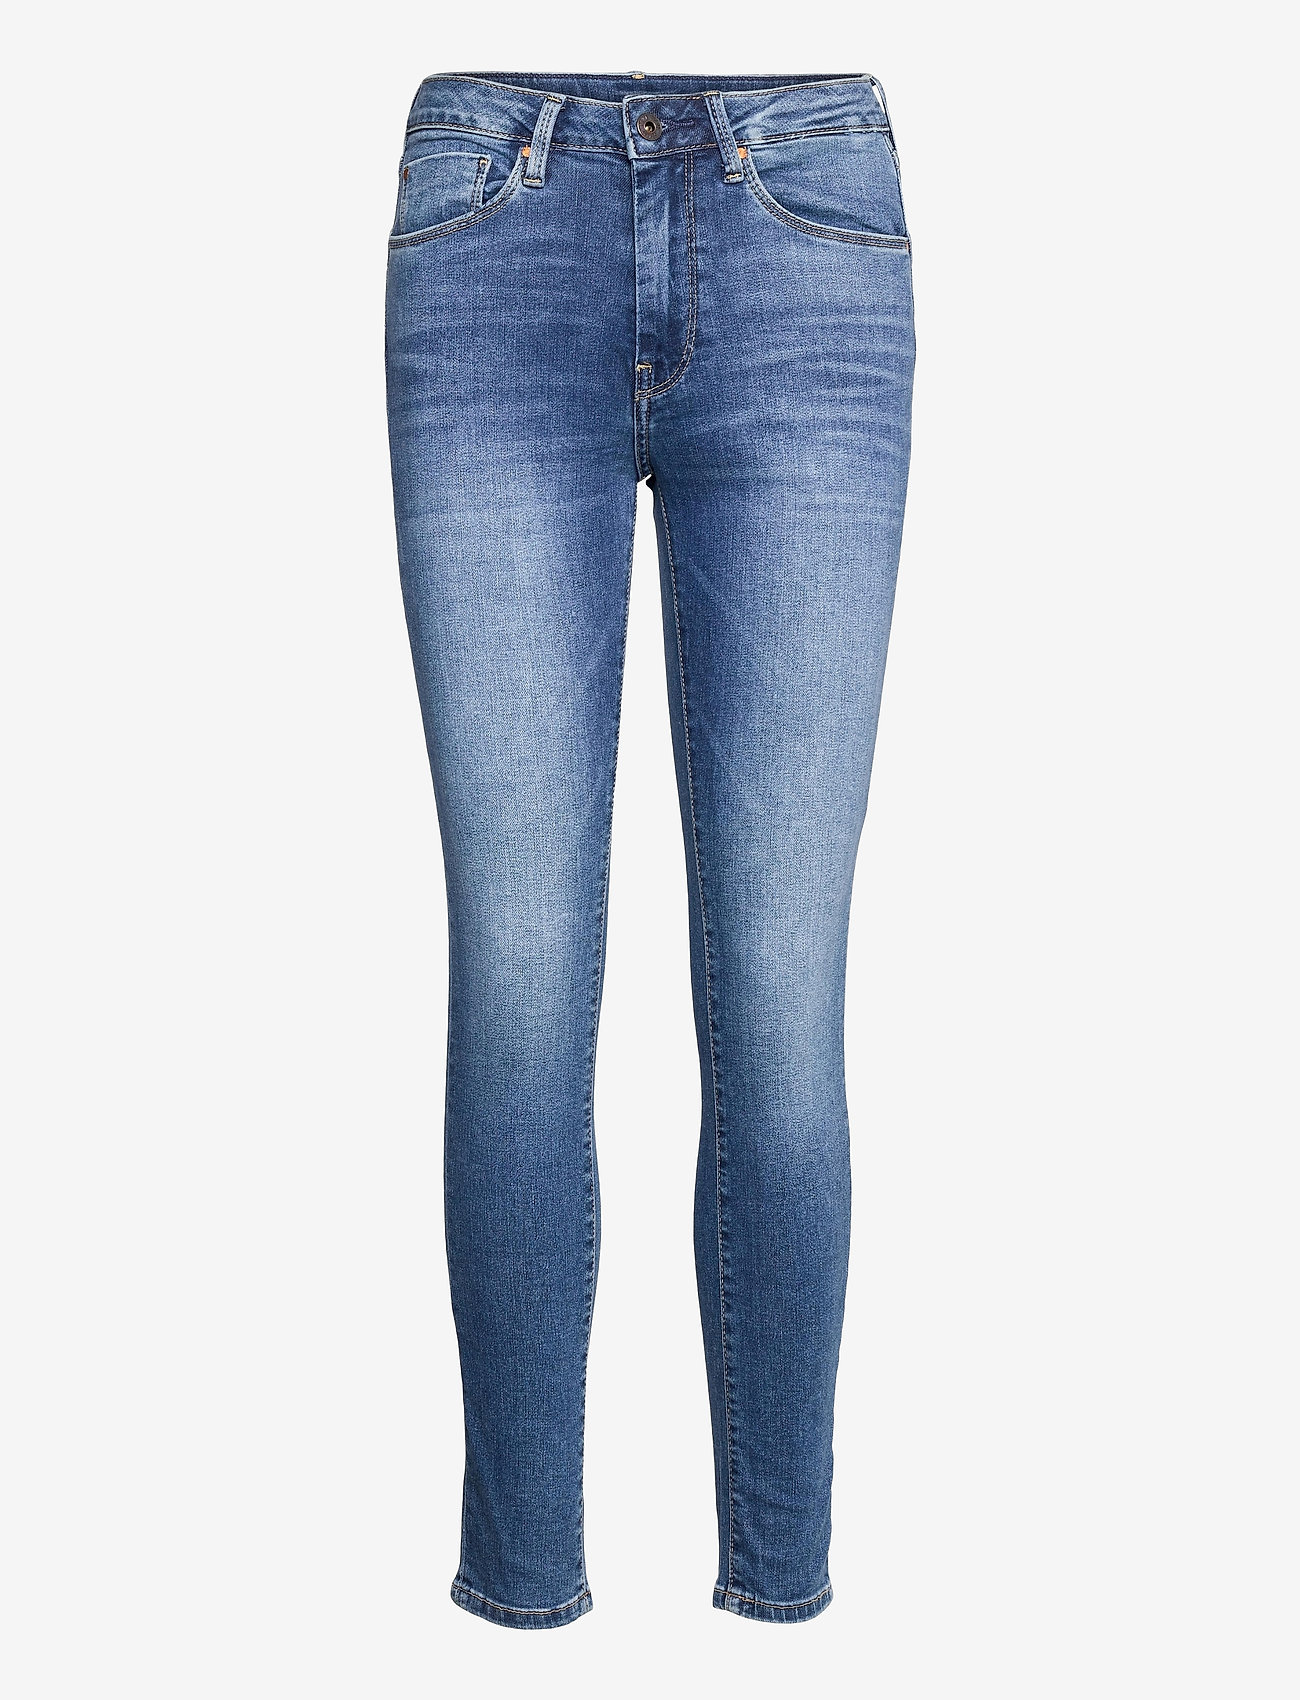 Pepe Jeans London - REGENT - dżinsy skinny fit - denim - 0